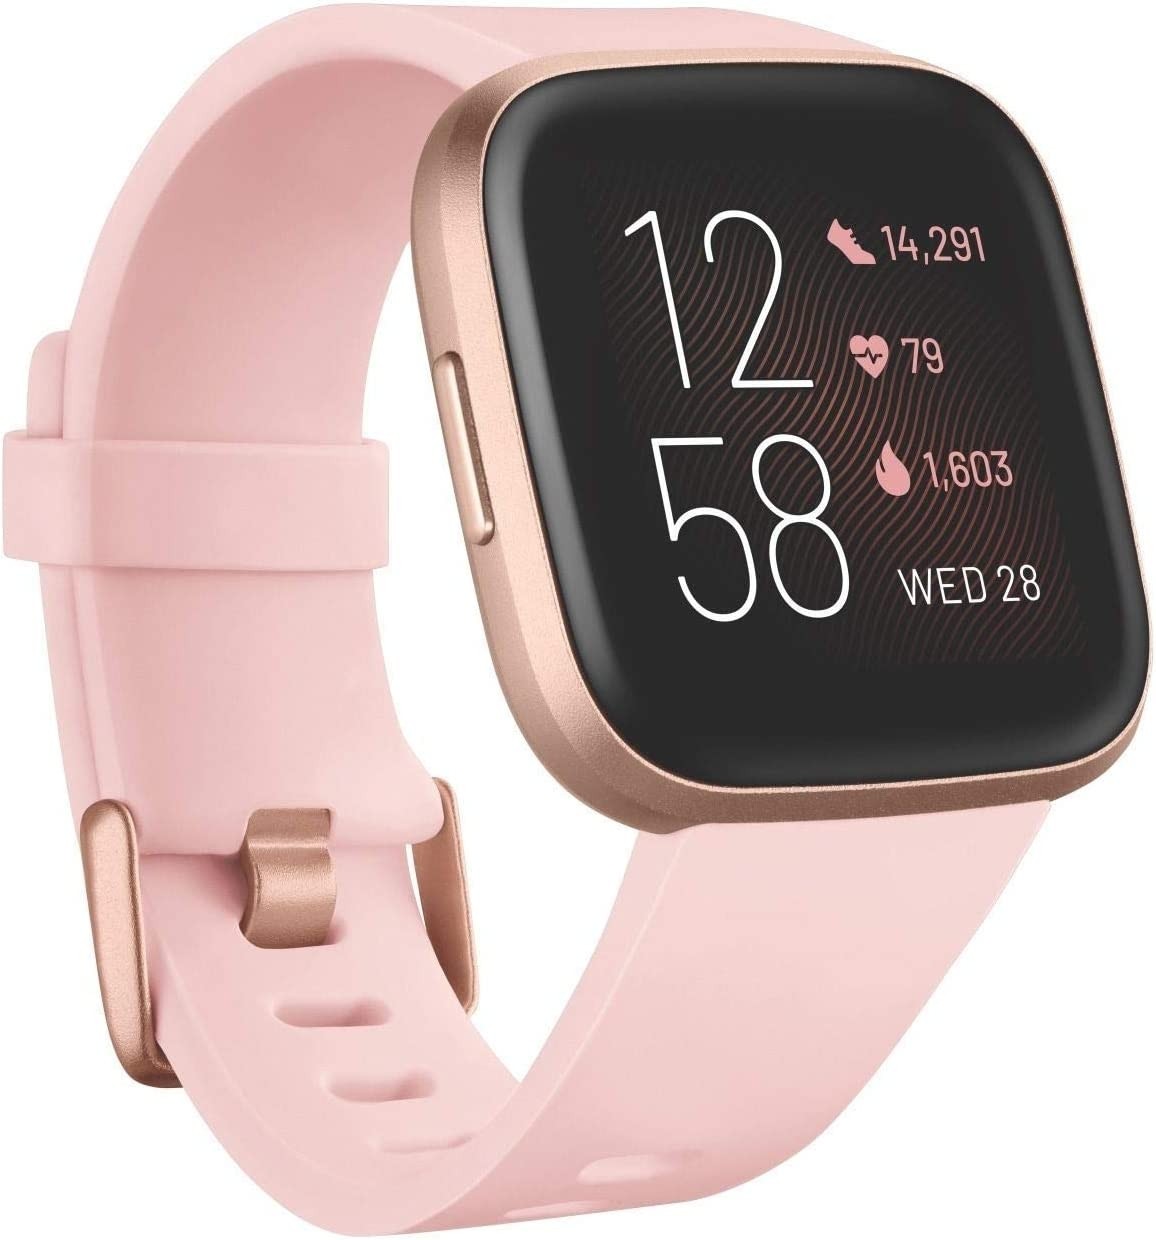 Fitbit Versa 2 Health & Fitness Smartwatch Copper Rose